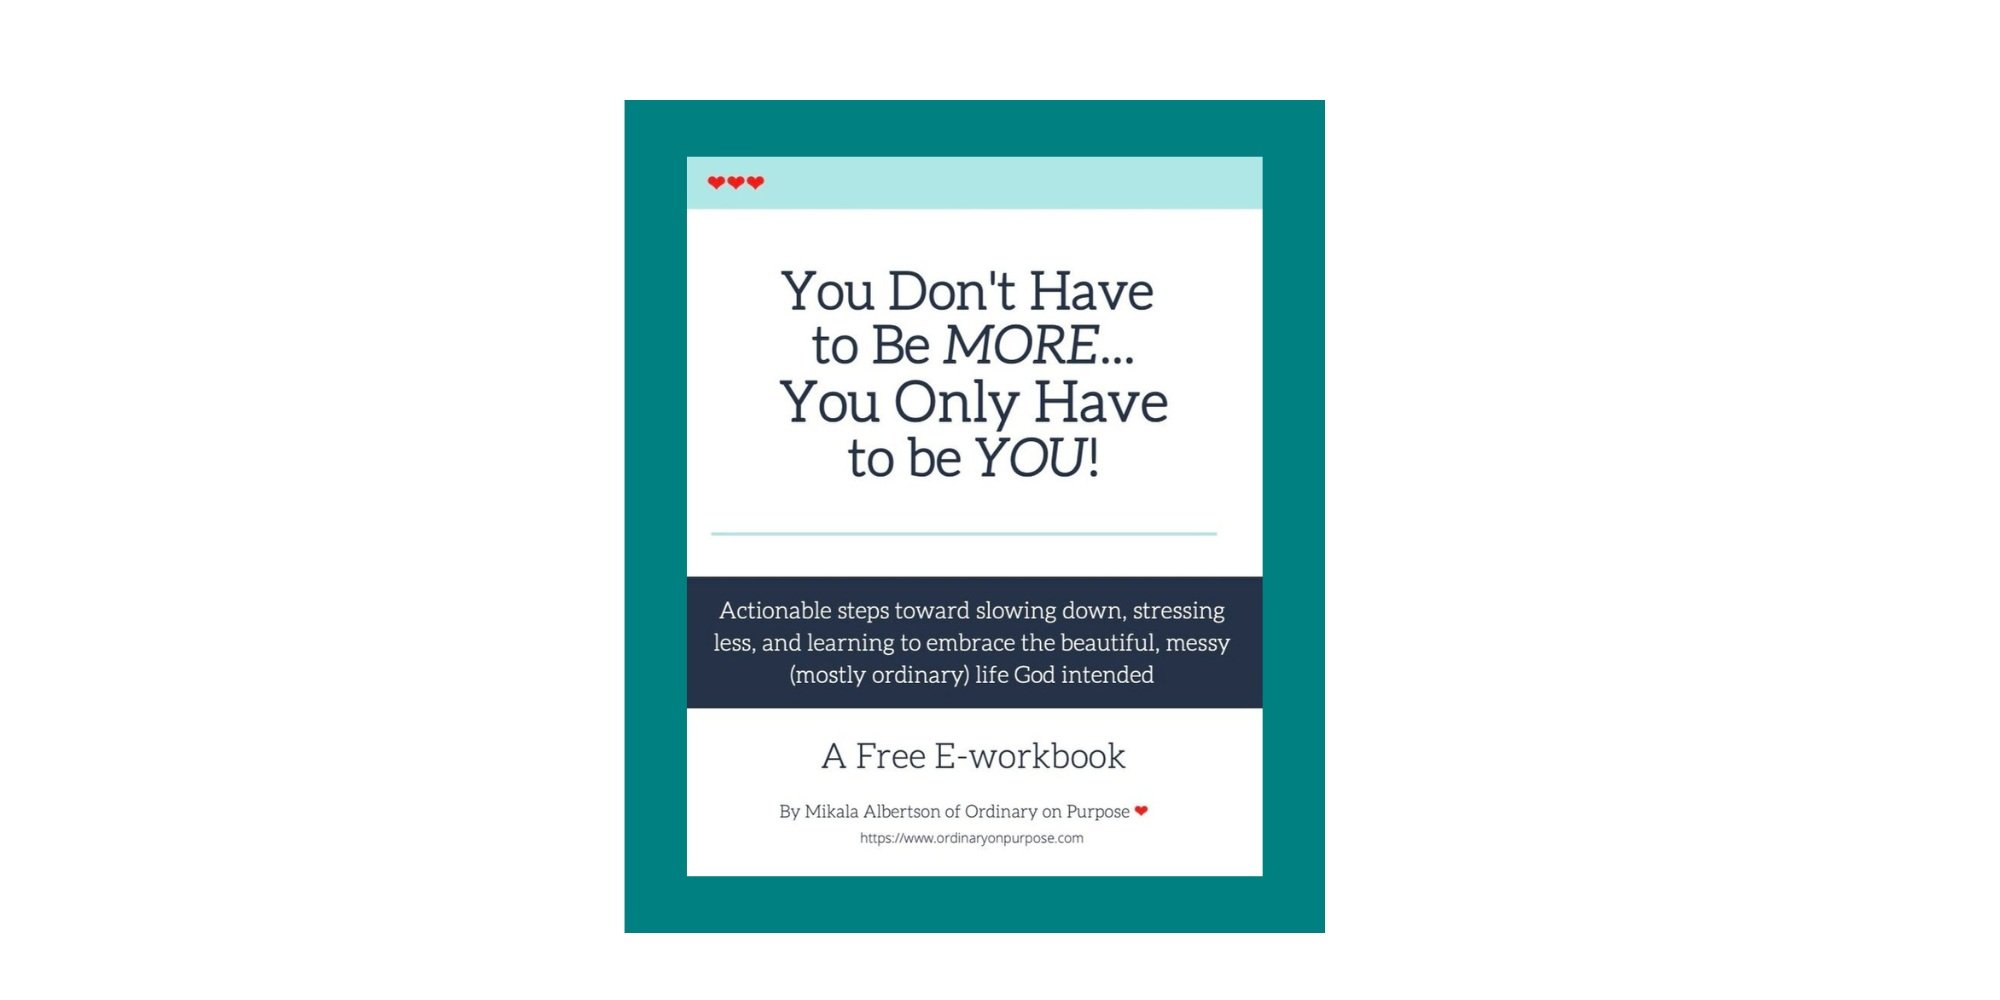 A Free E-workbook